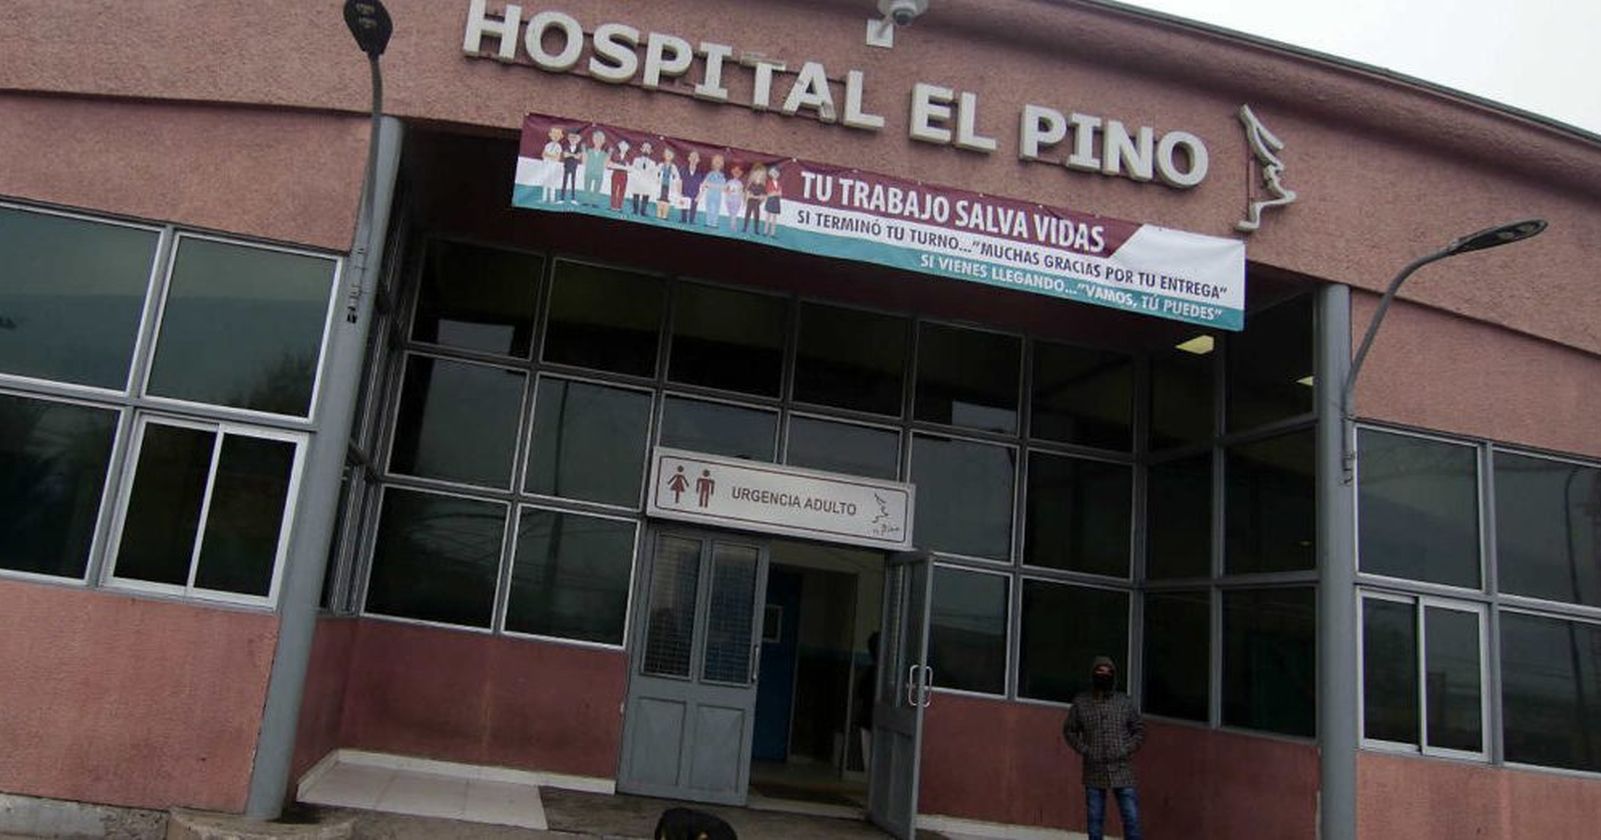 Hospital El Pino COVID